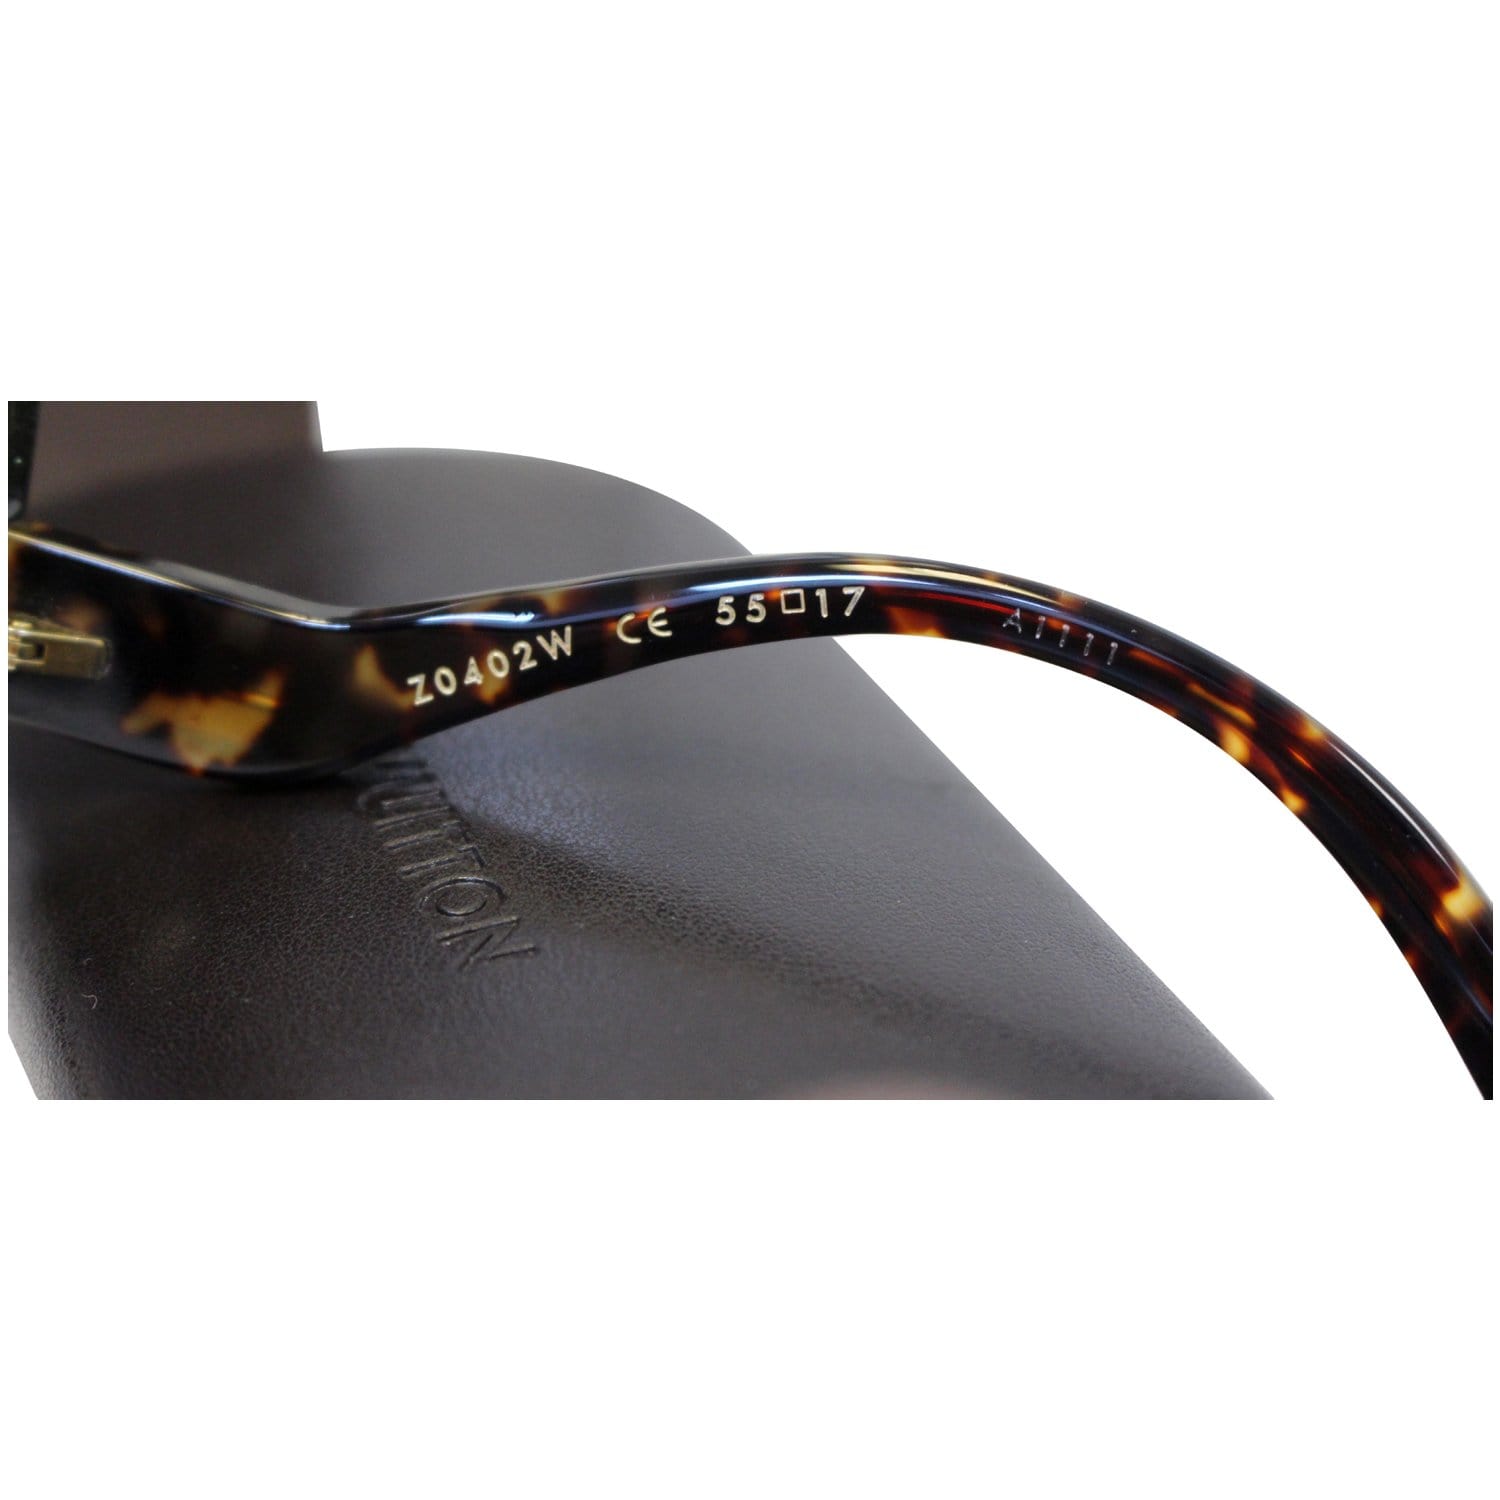 Louis Vuitton Anemone Navy Sunglasses - Lv Sunglasses